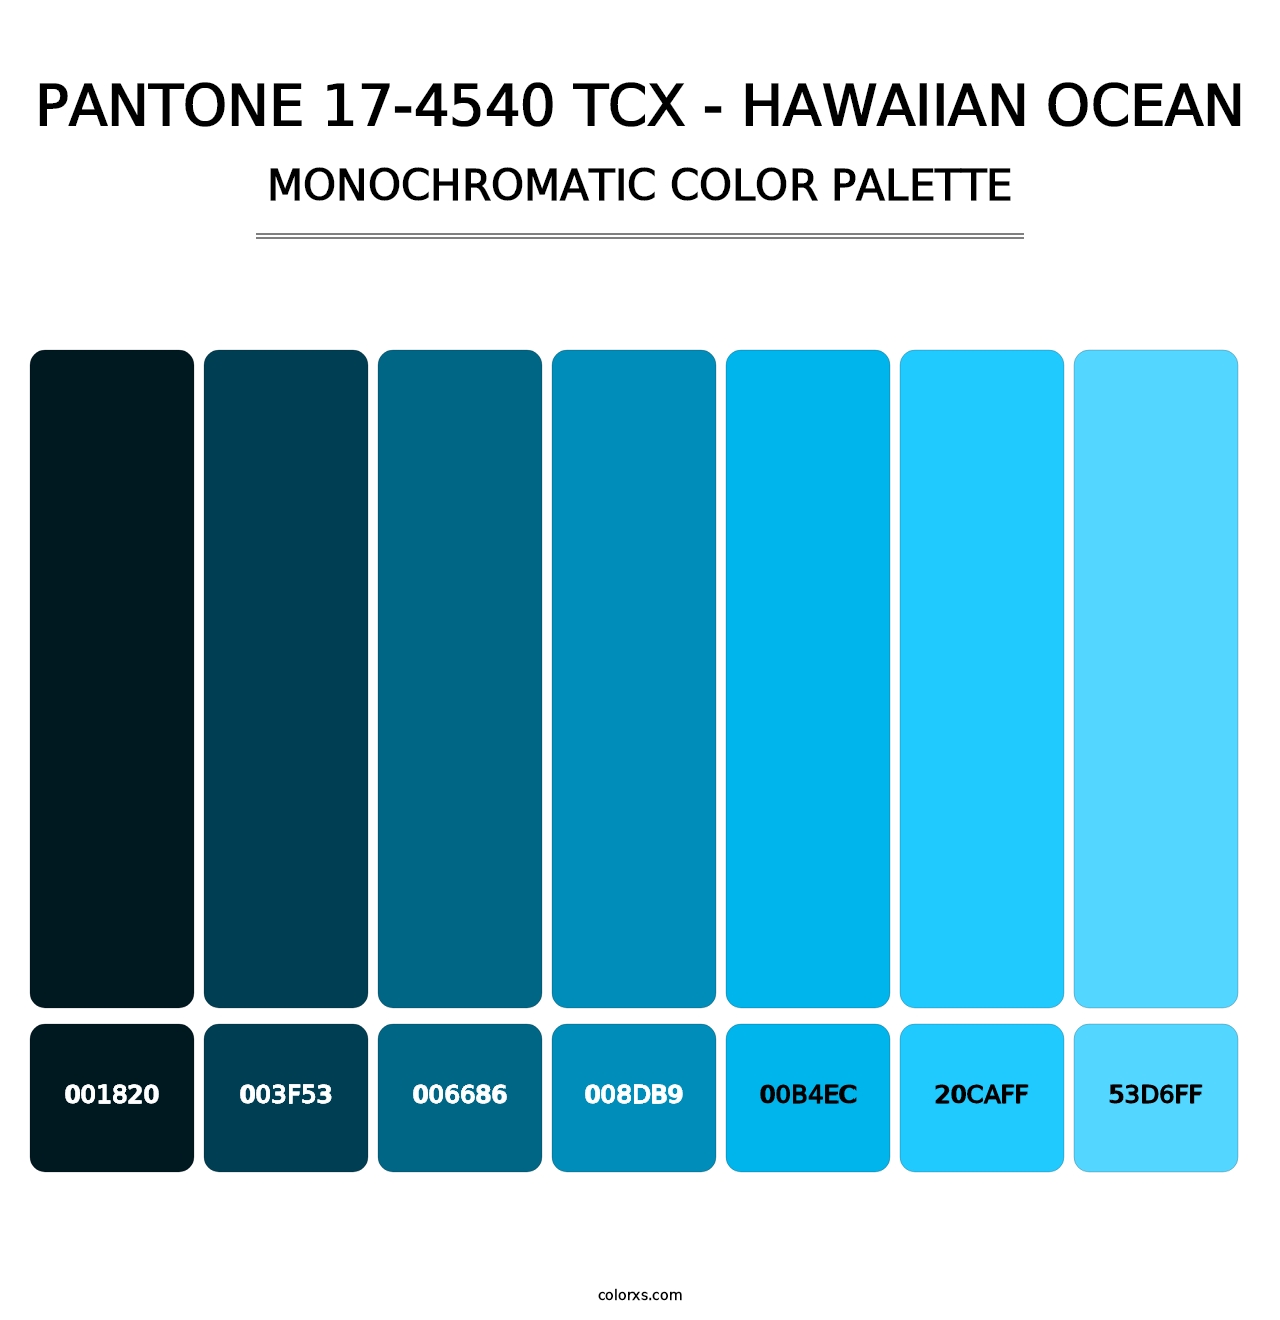 PANTONE 17-4540 TCX - Hawaiian Ocean - Monochromatic Color Palette